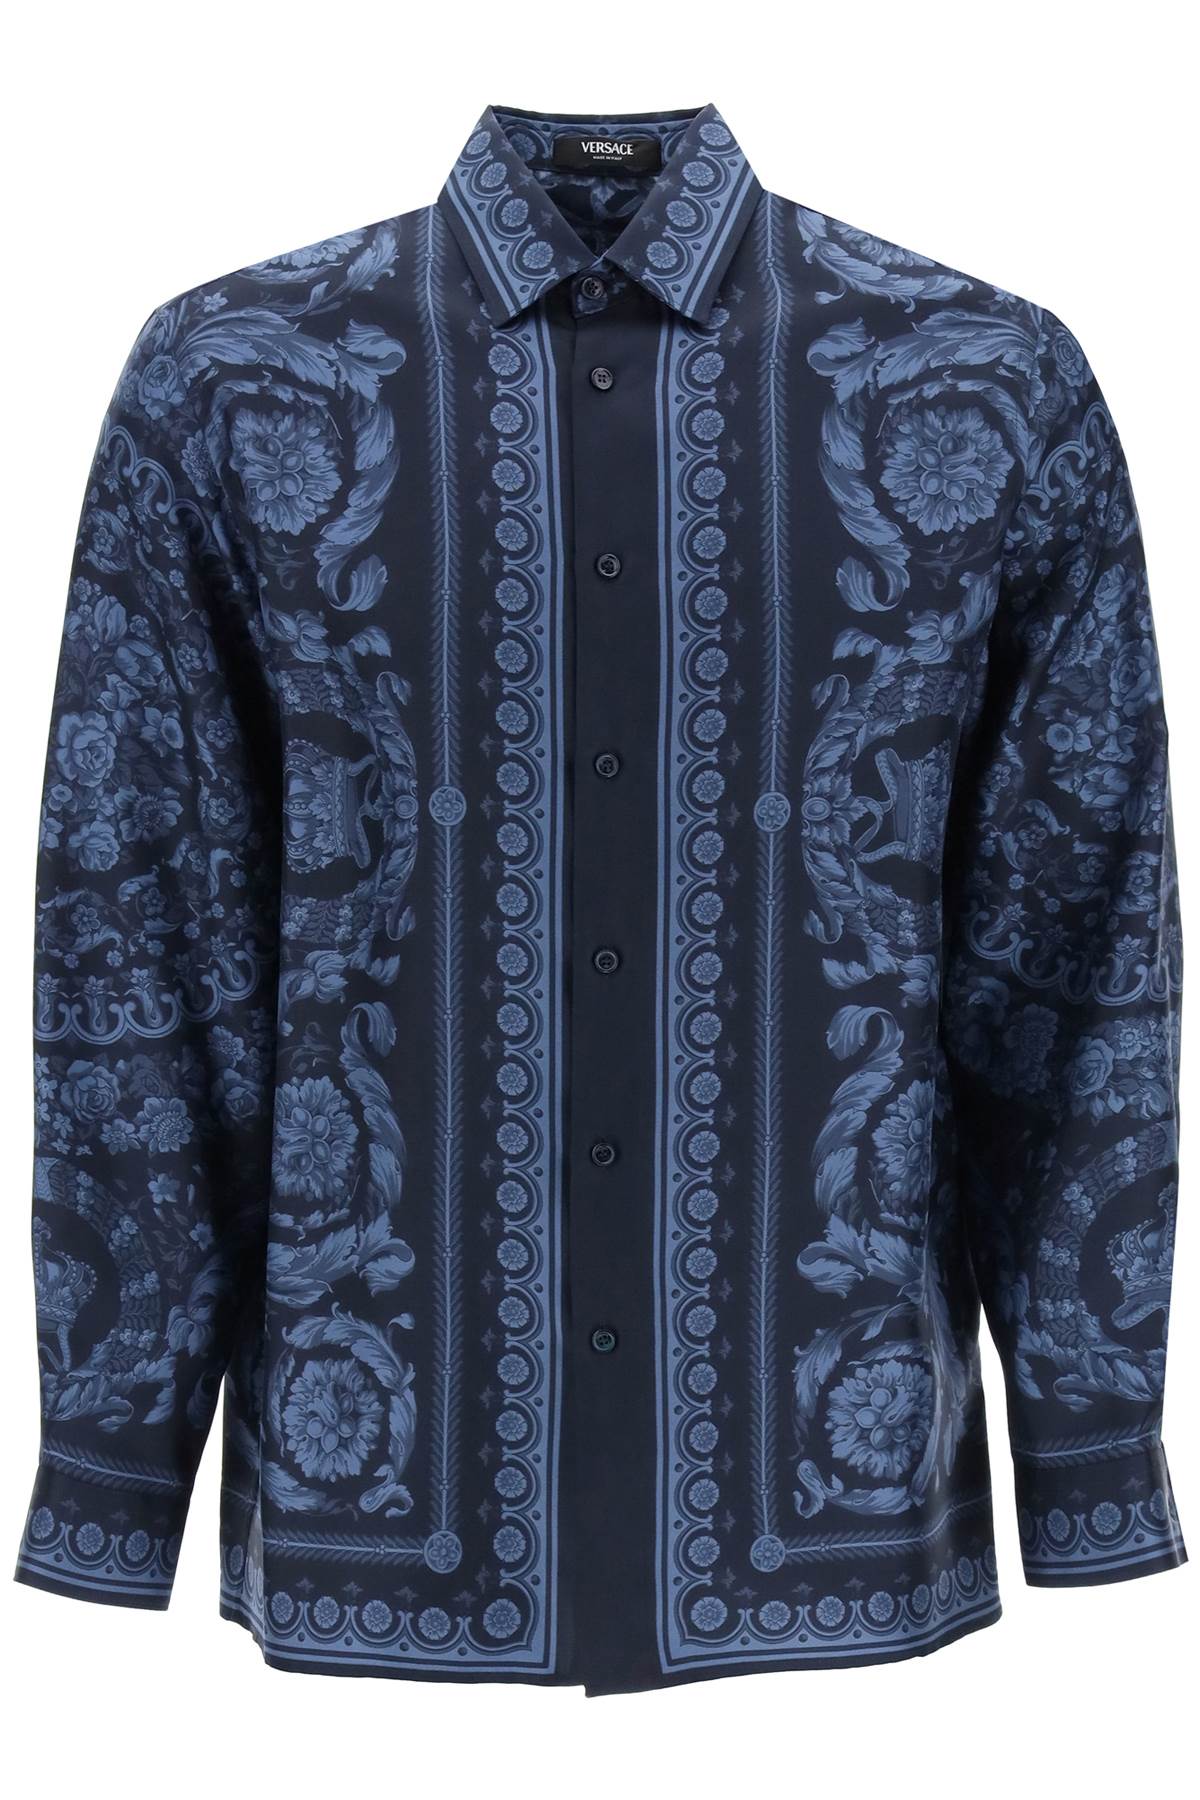 VERSACE Baroque Motif Printed Silk Shirt for Men